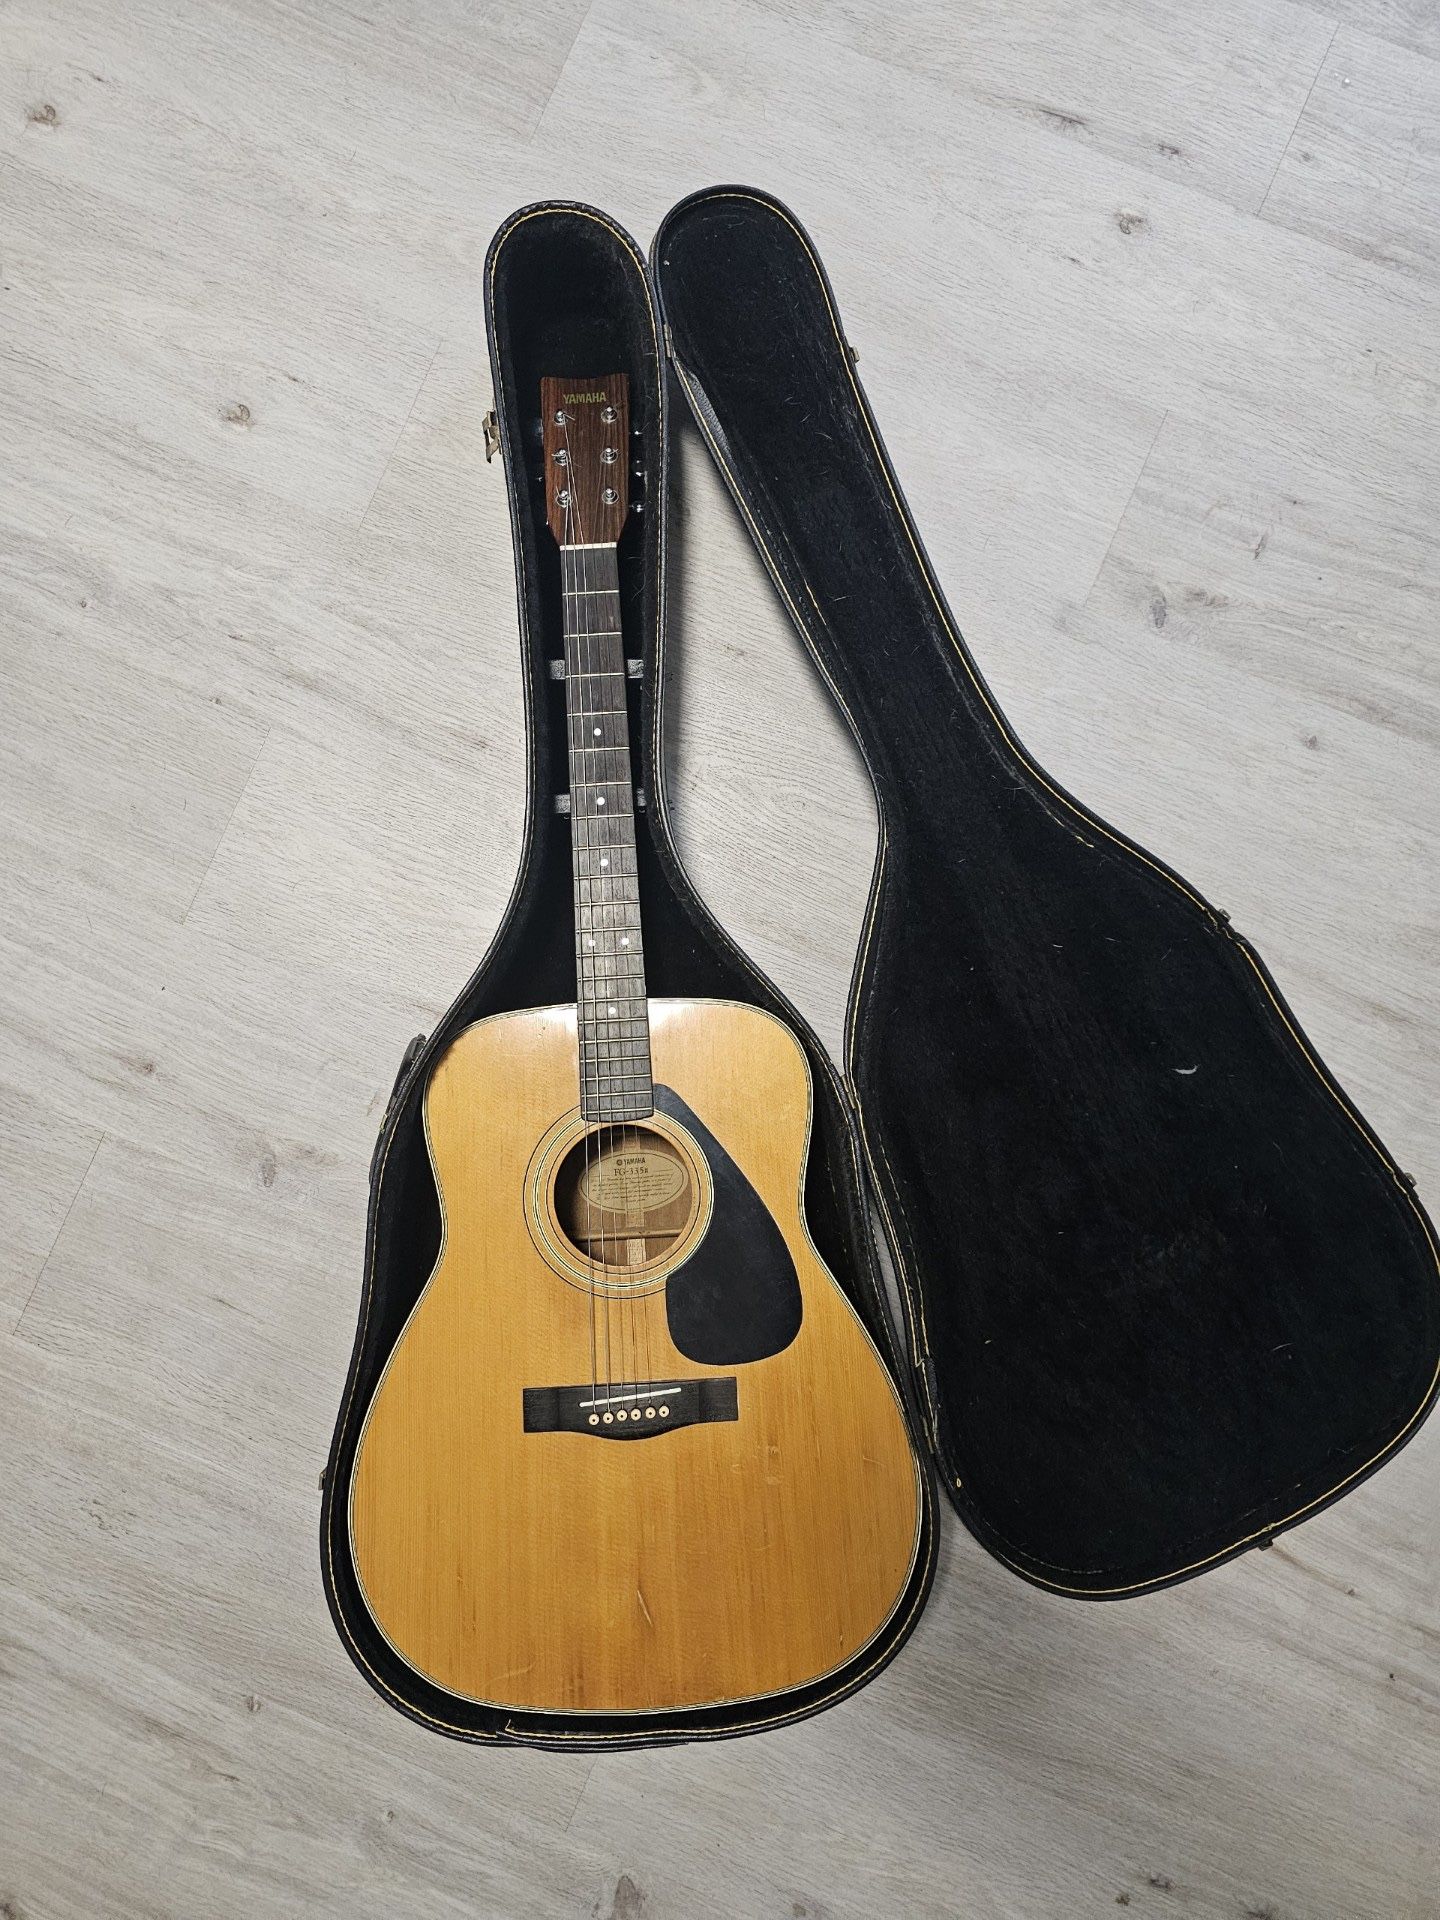 Yamaha FG-335ii Acoustic Guitar with Case FG335 II FG 335 Dreadnought Vintage